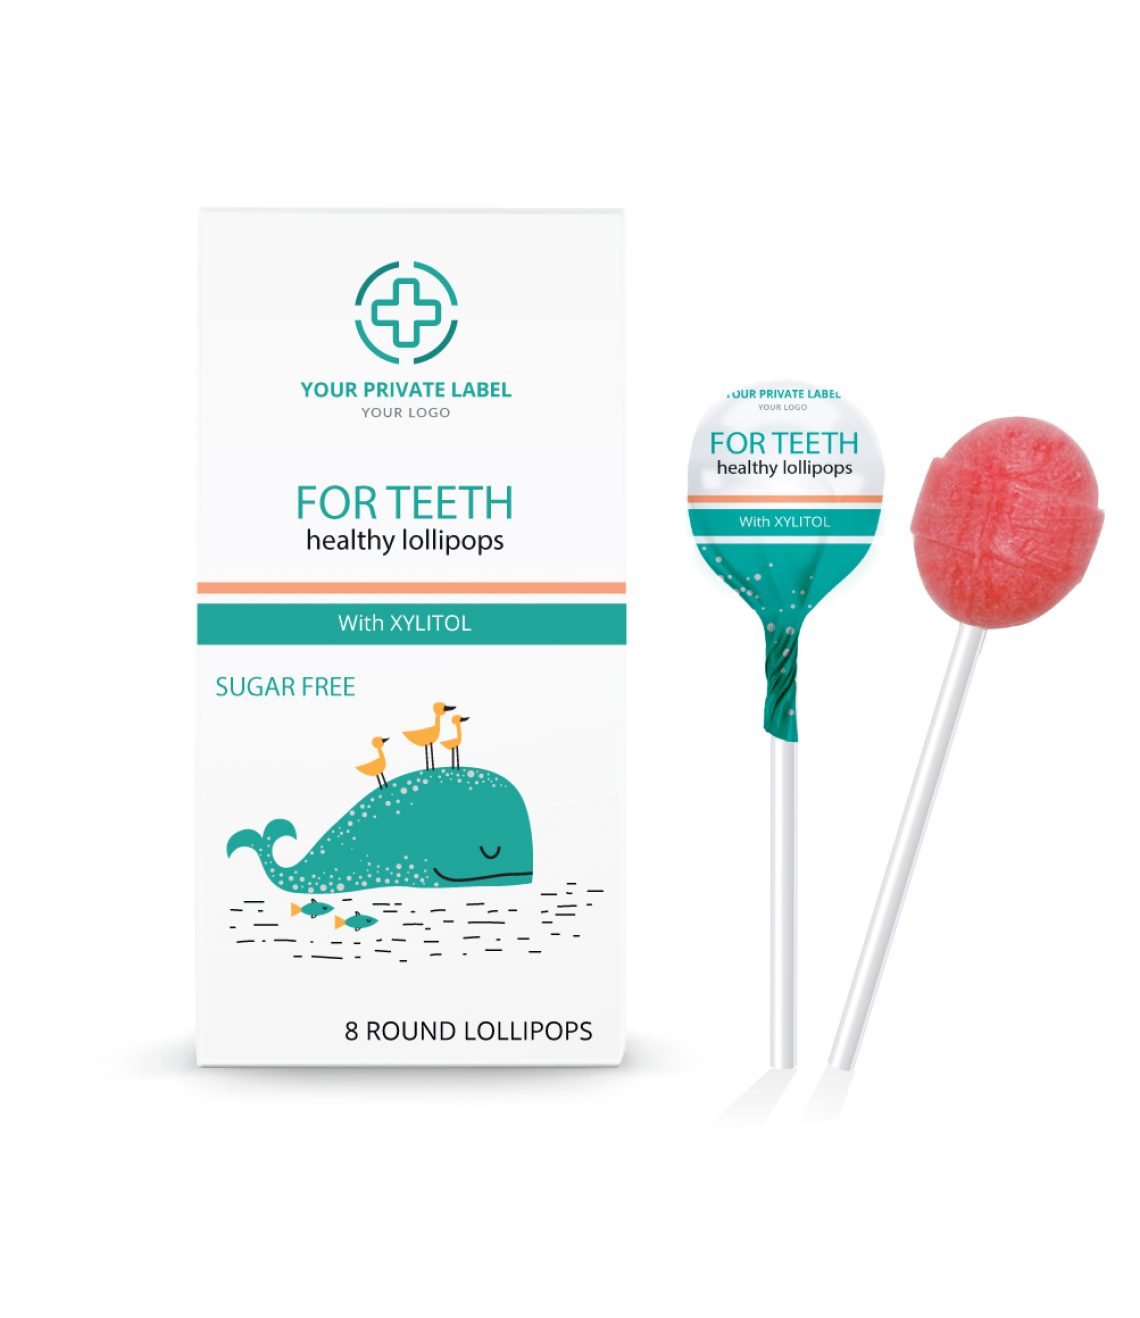 Healthy-lollipops-for-teeth-8-round-lollipops